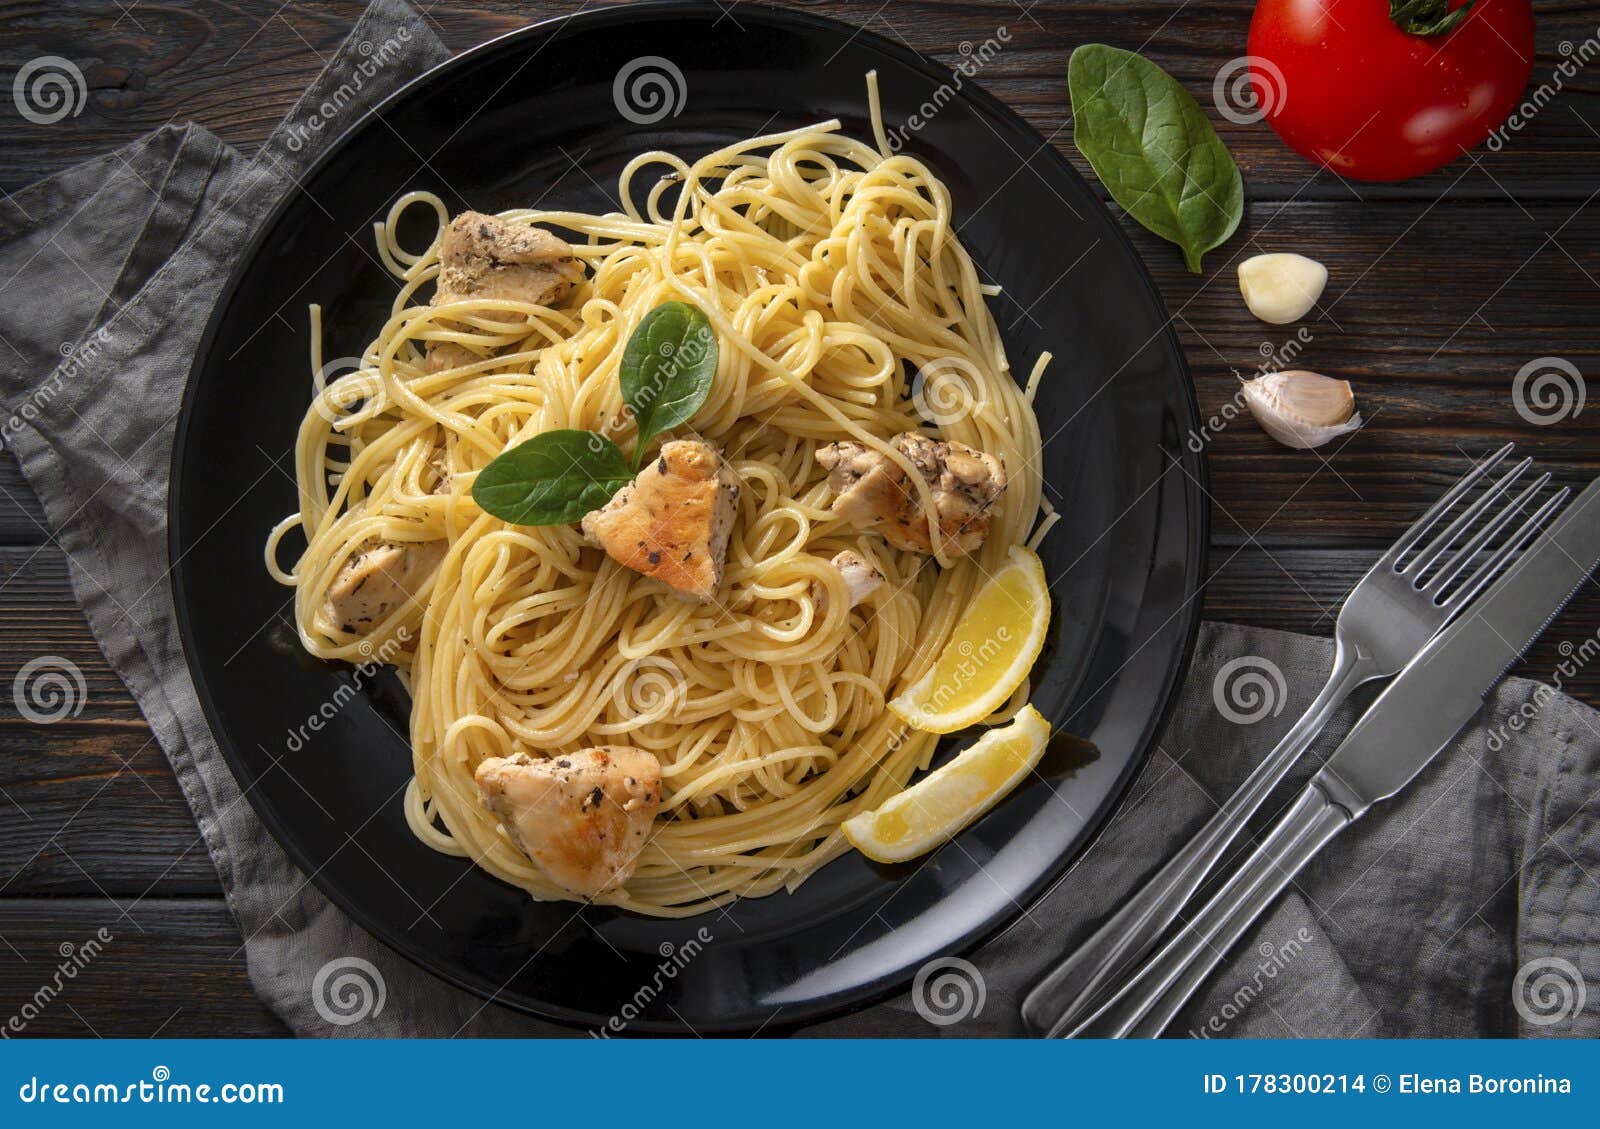 Pasta, Spaghetti with Chicken Fillet, Lemon Slices, Herbs, Tomato ...